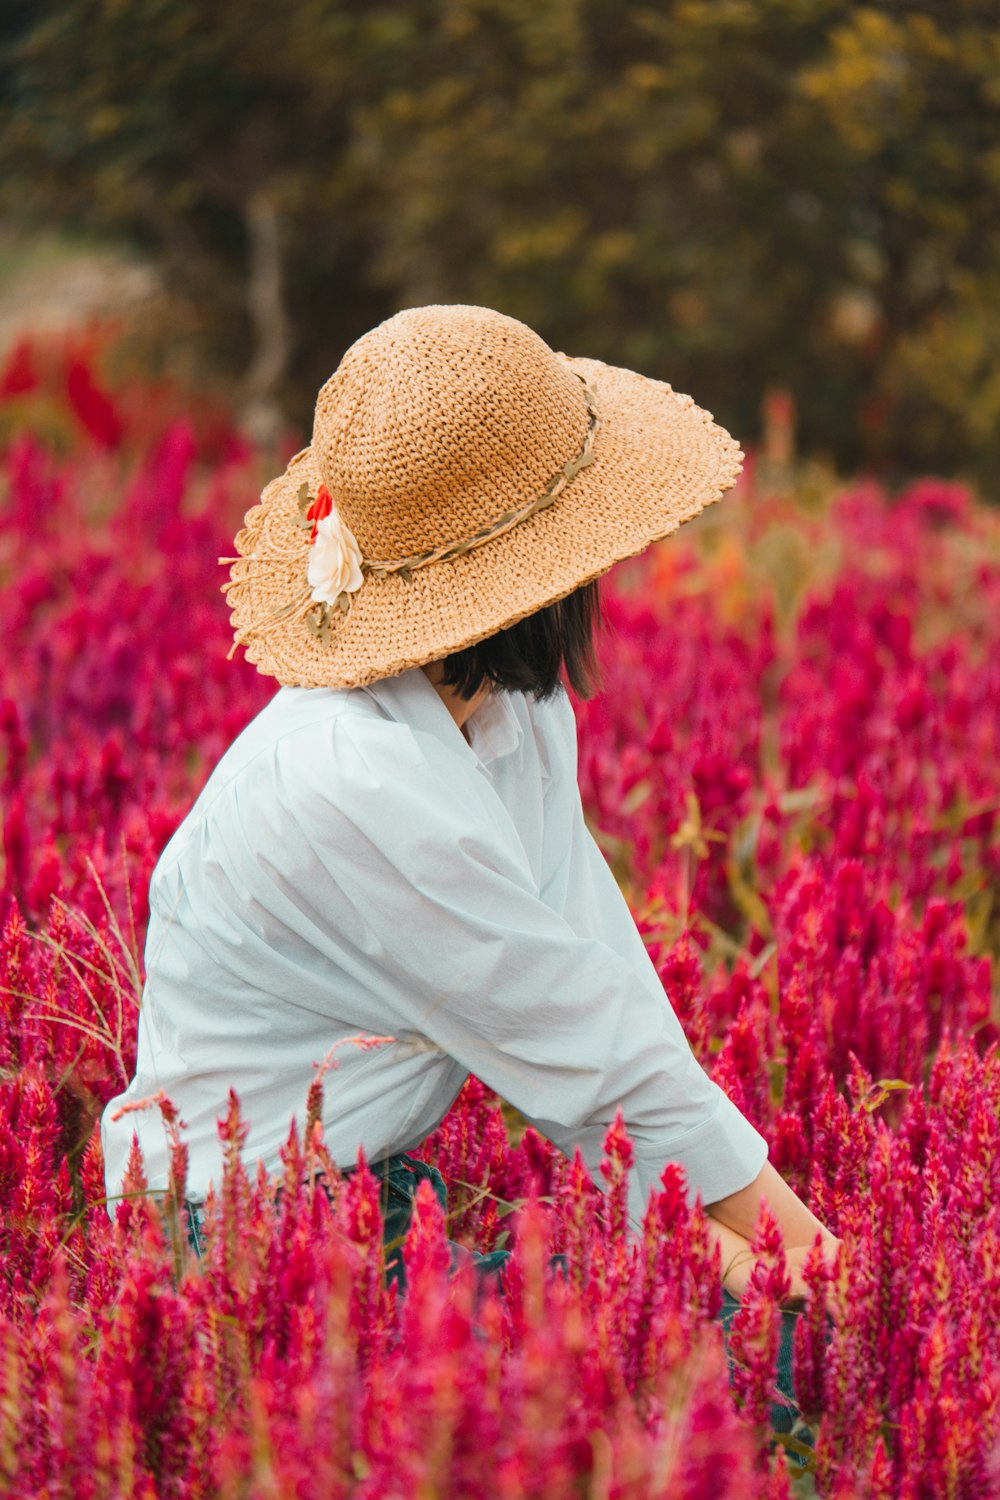 a woman kneeling in a field of red flowers